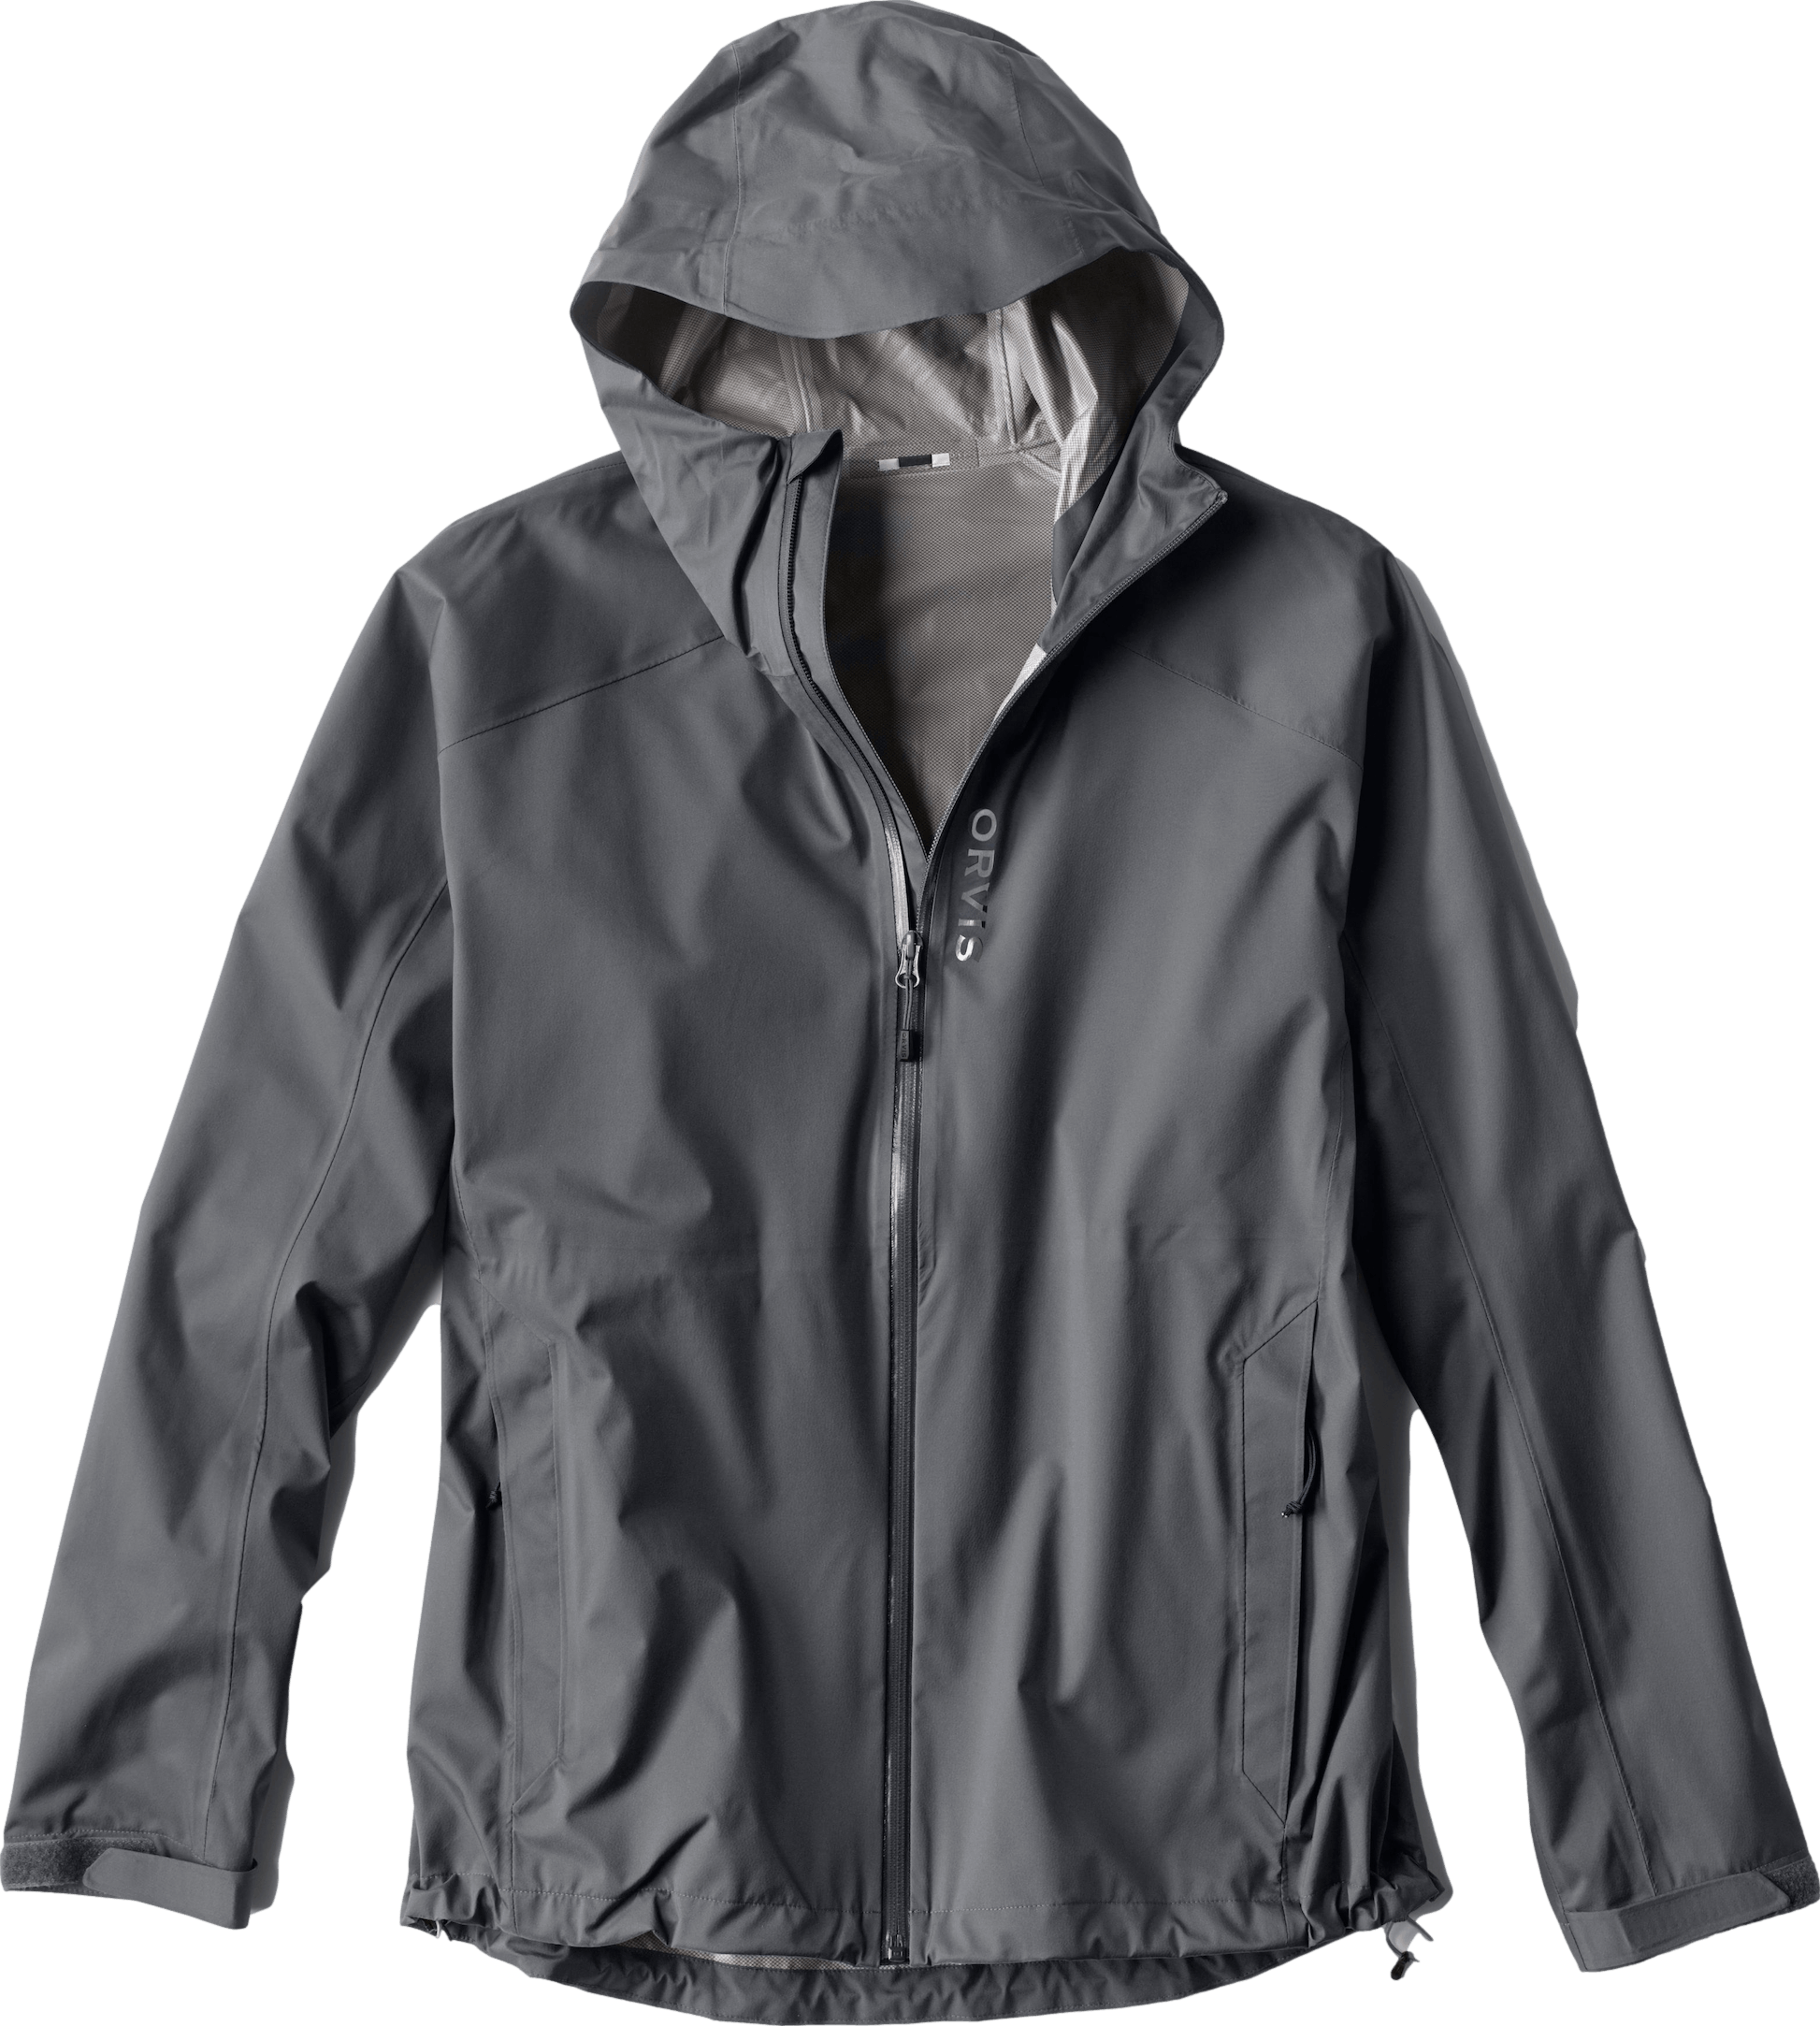 Orvis Men's Ultralight Storm 2.5L Jacket